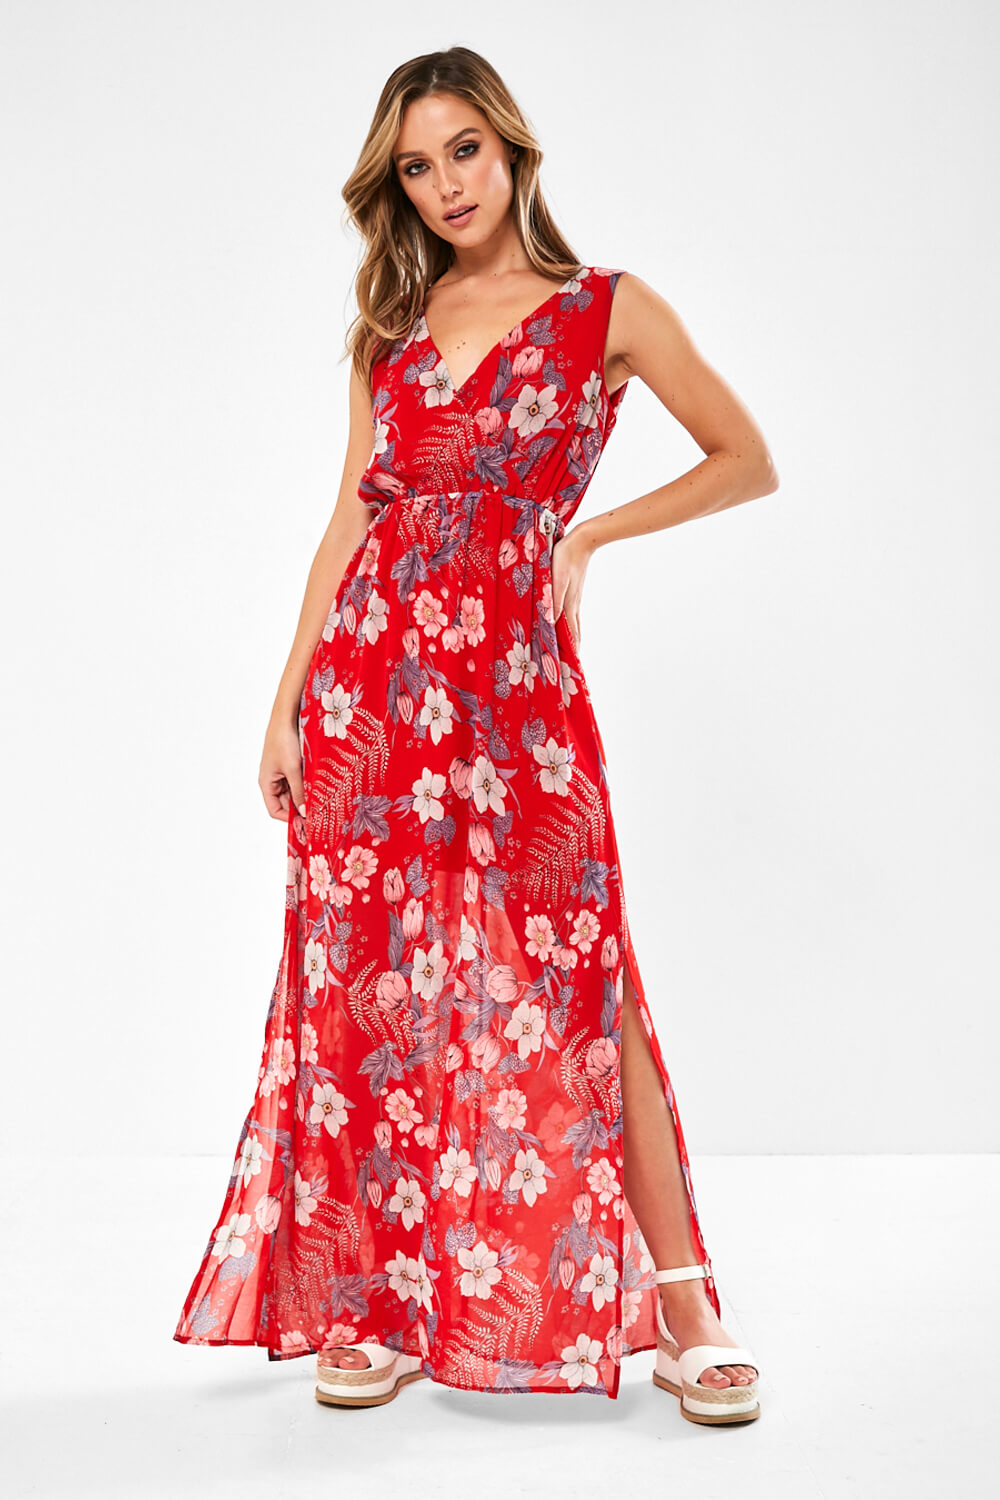 Stella Noelle Sleeveless Floral Print Dress in Red | iCLOTHING - iCLOTHING